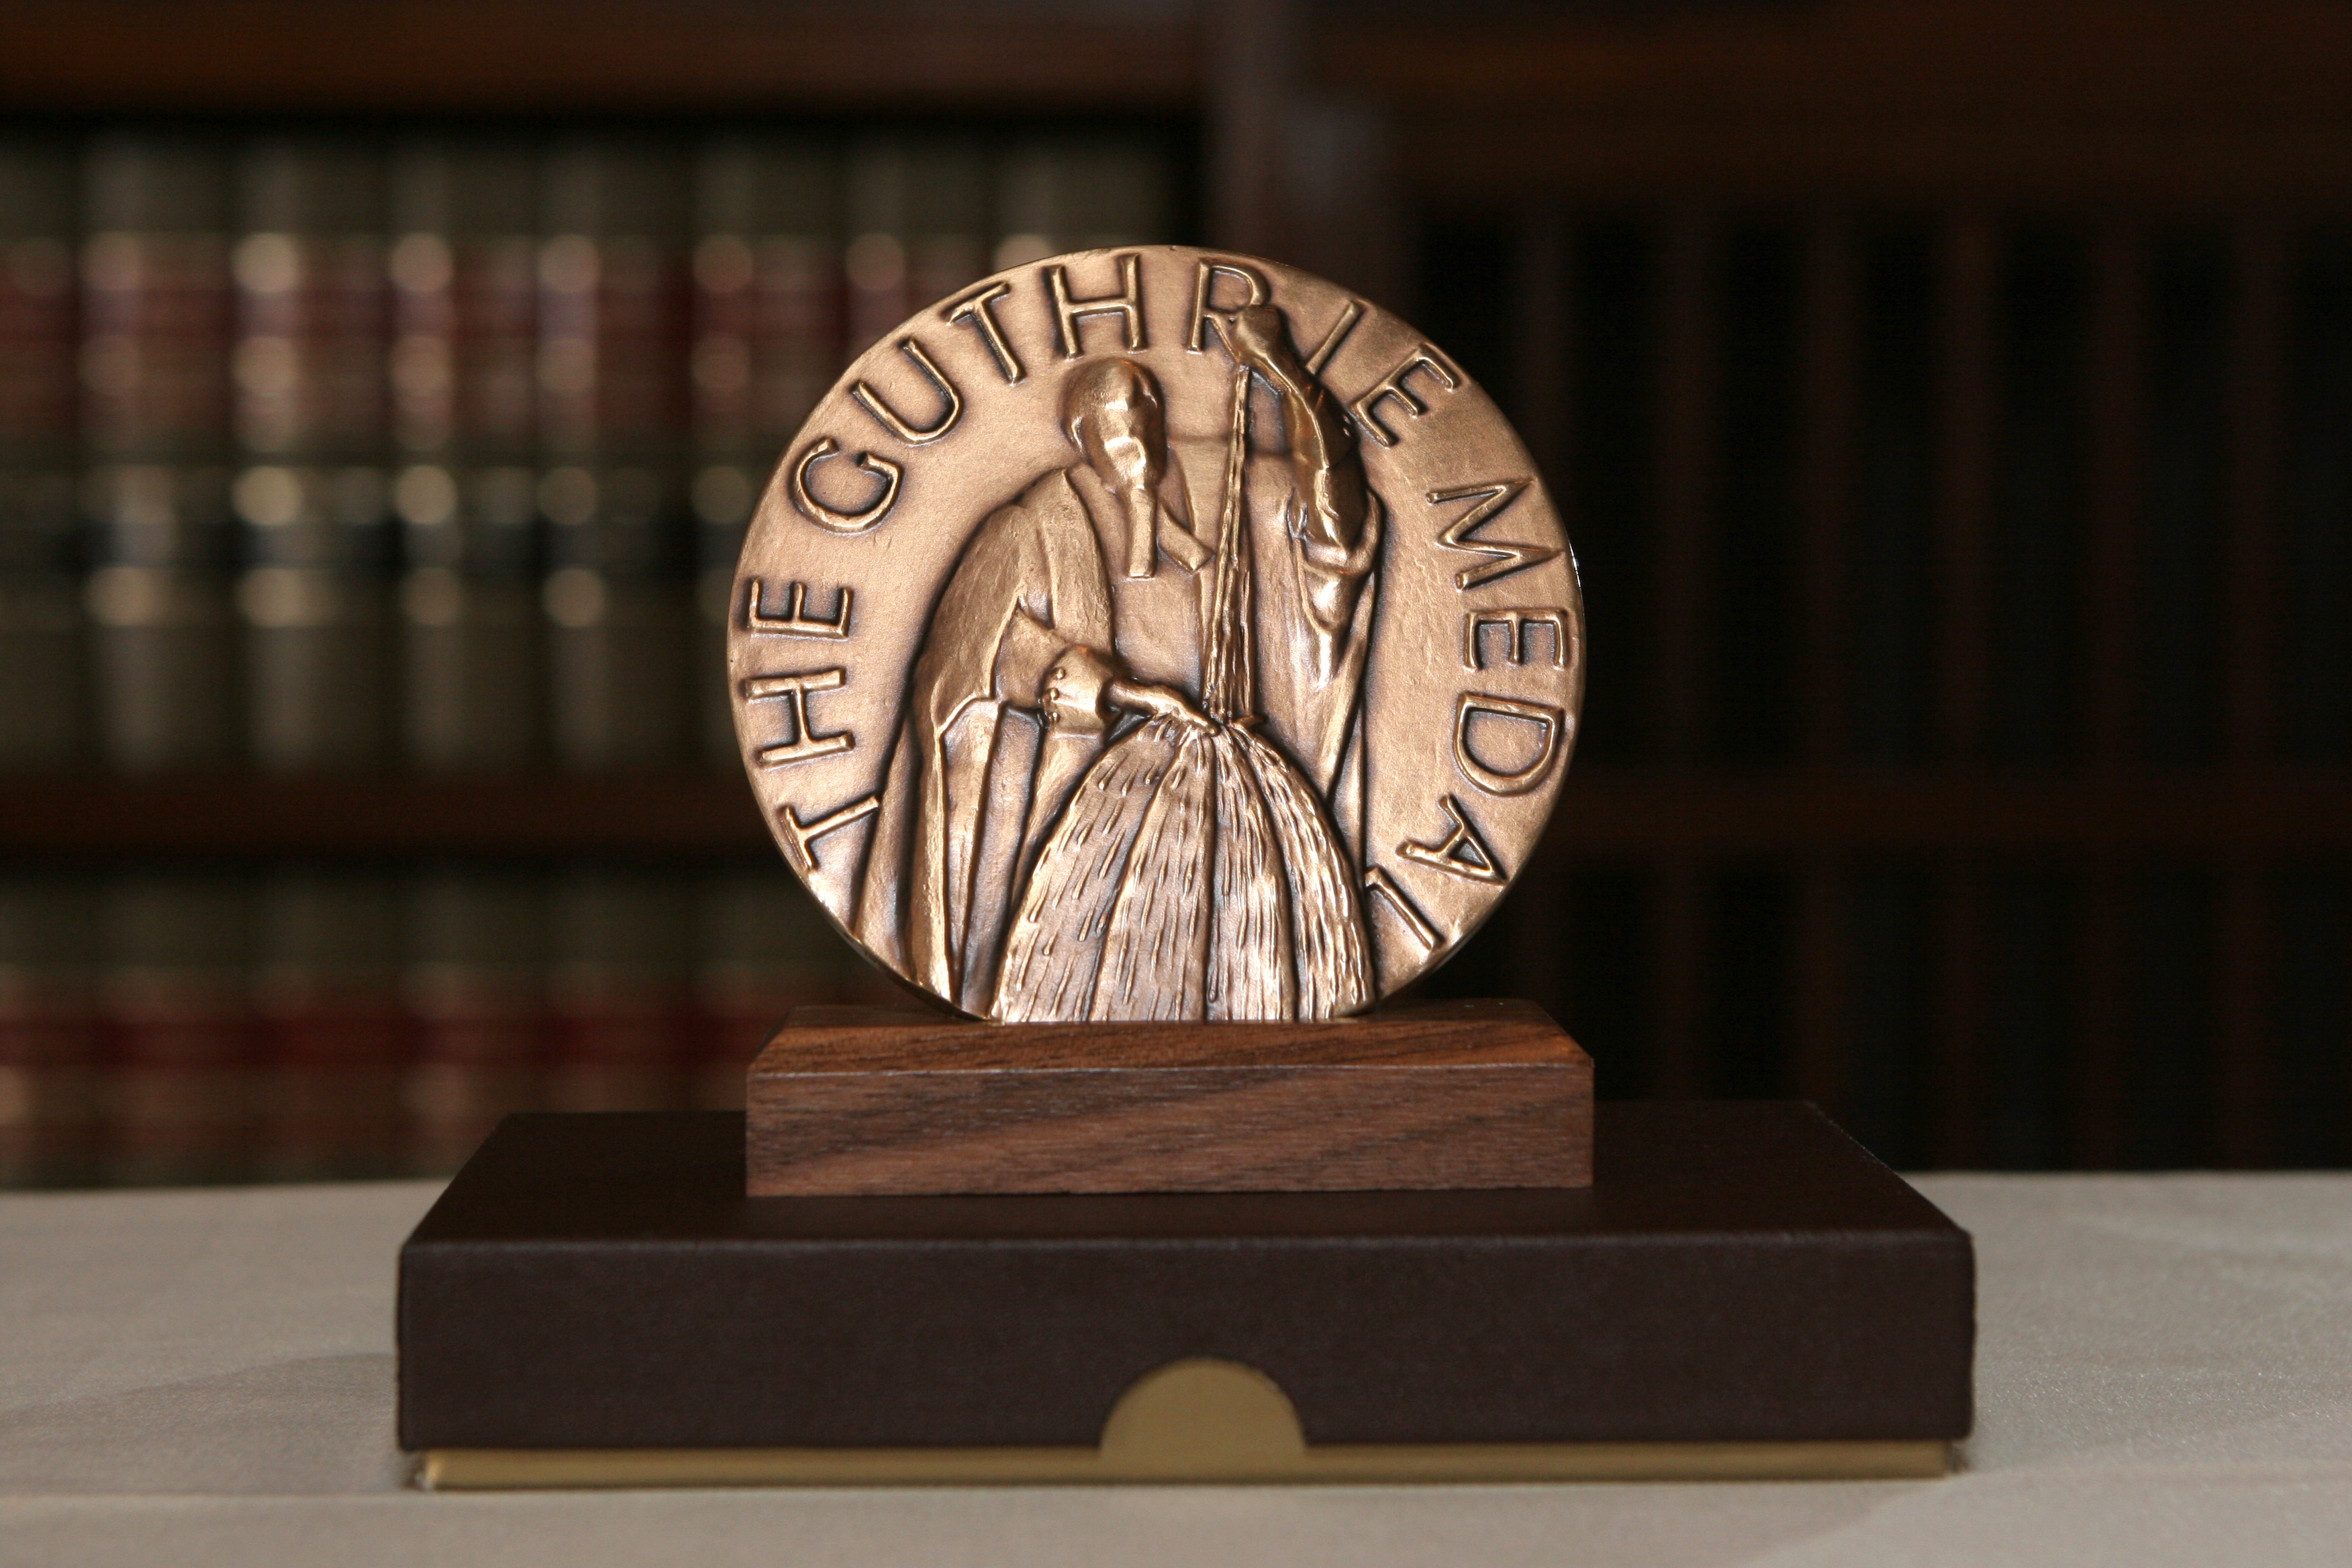 The Guthrie Medal